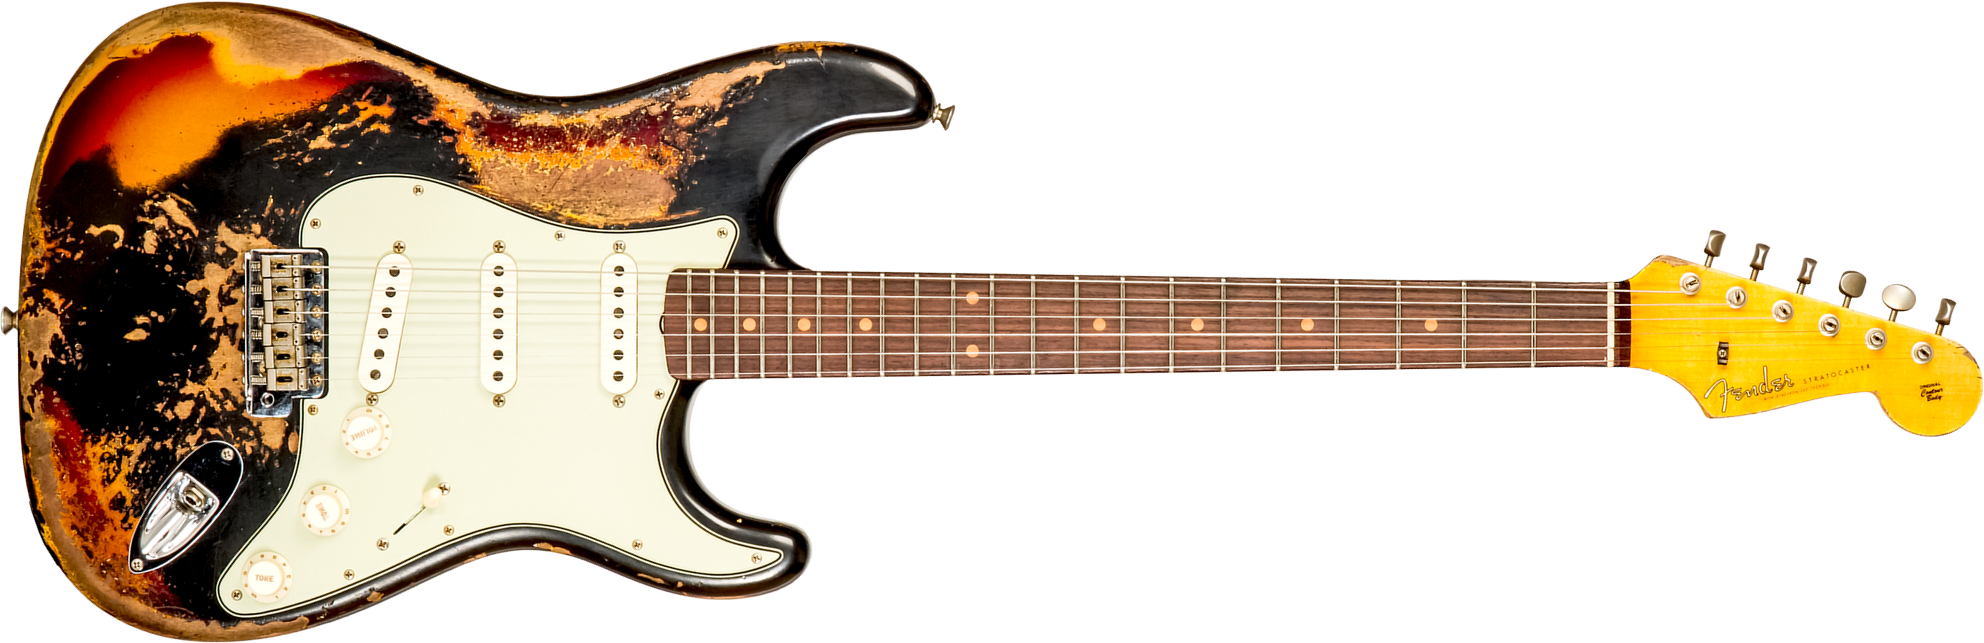 Fender Custom Shop Strat 1959 3s Trem Rw #cz576154 - Super Heavy Relic Black O. 3-color Sunburst - Str shape electric guitar - Main picture